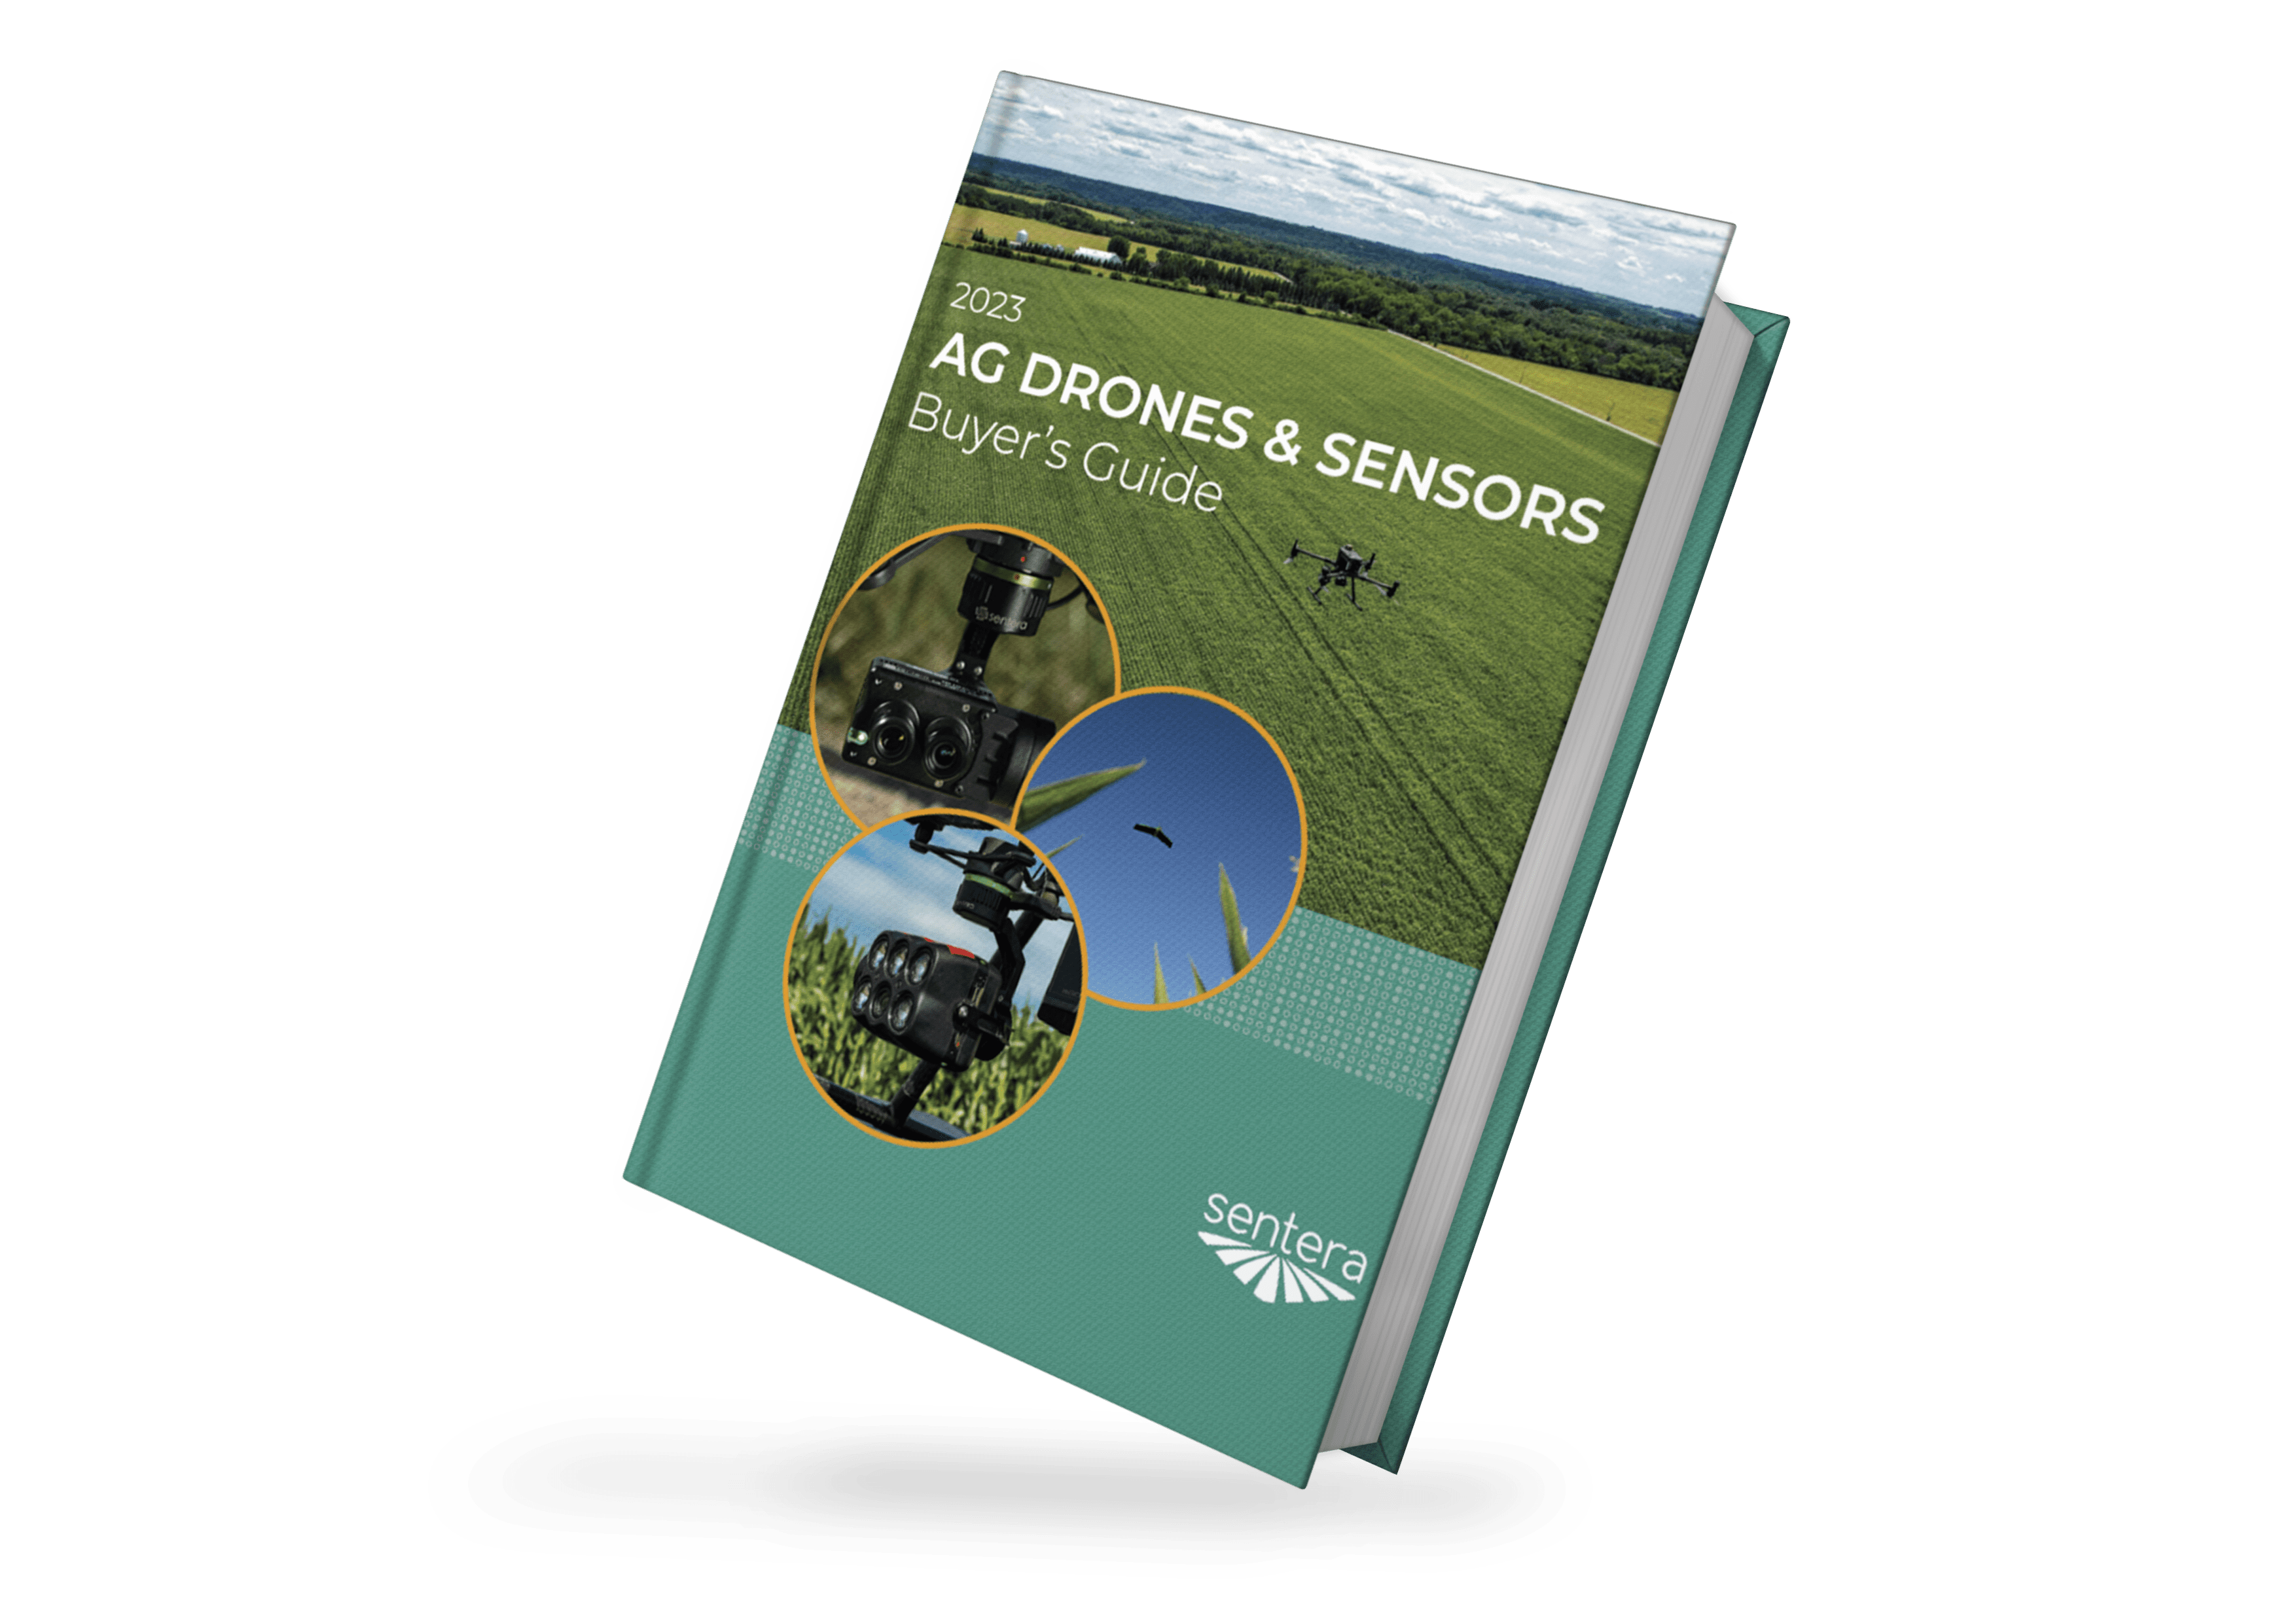 Sentera's Ag Drones & Sensors Buyers Guide